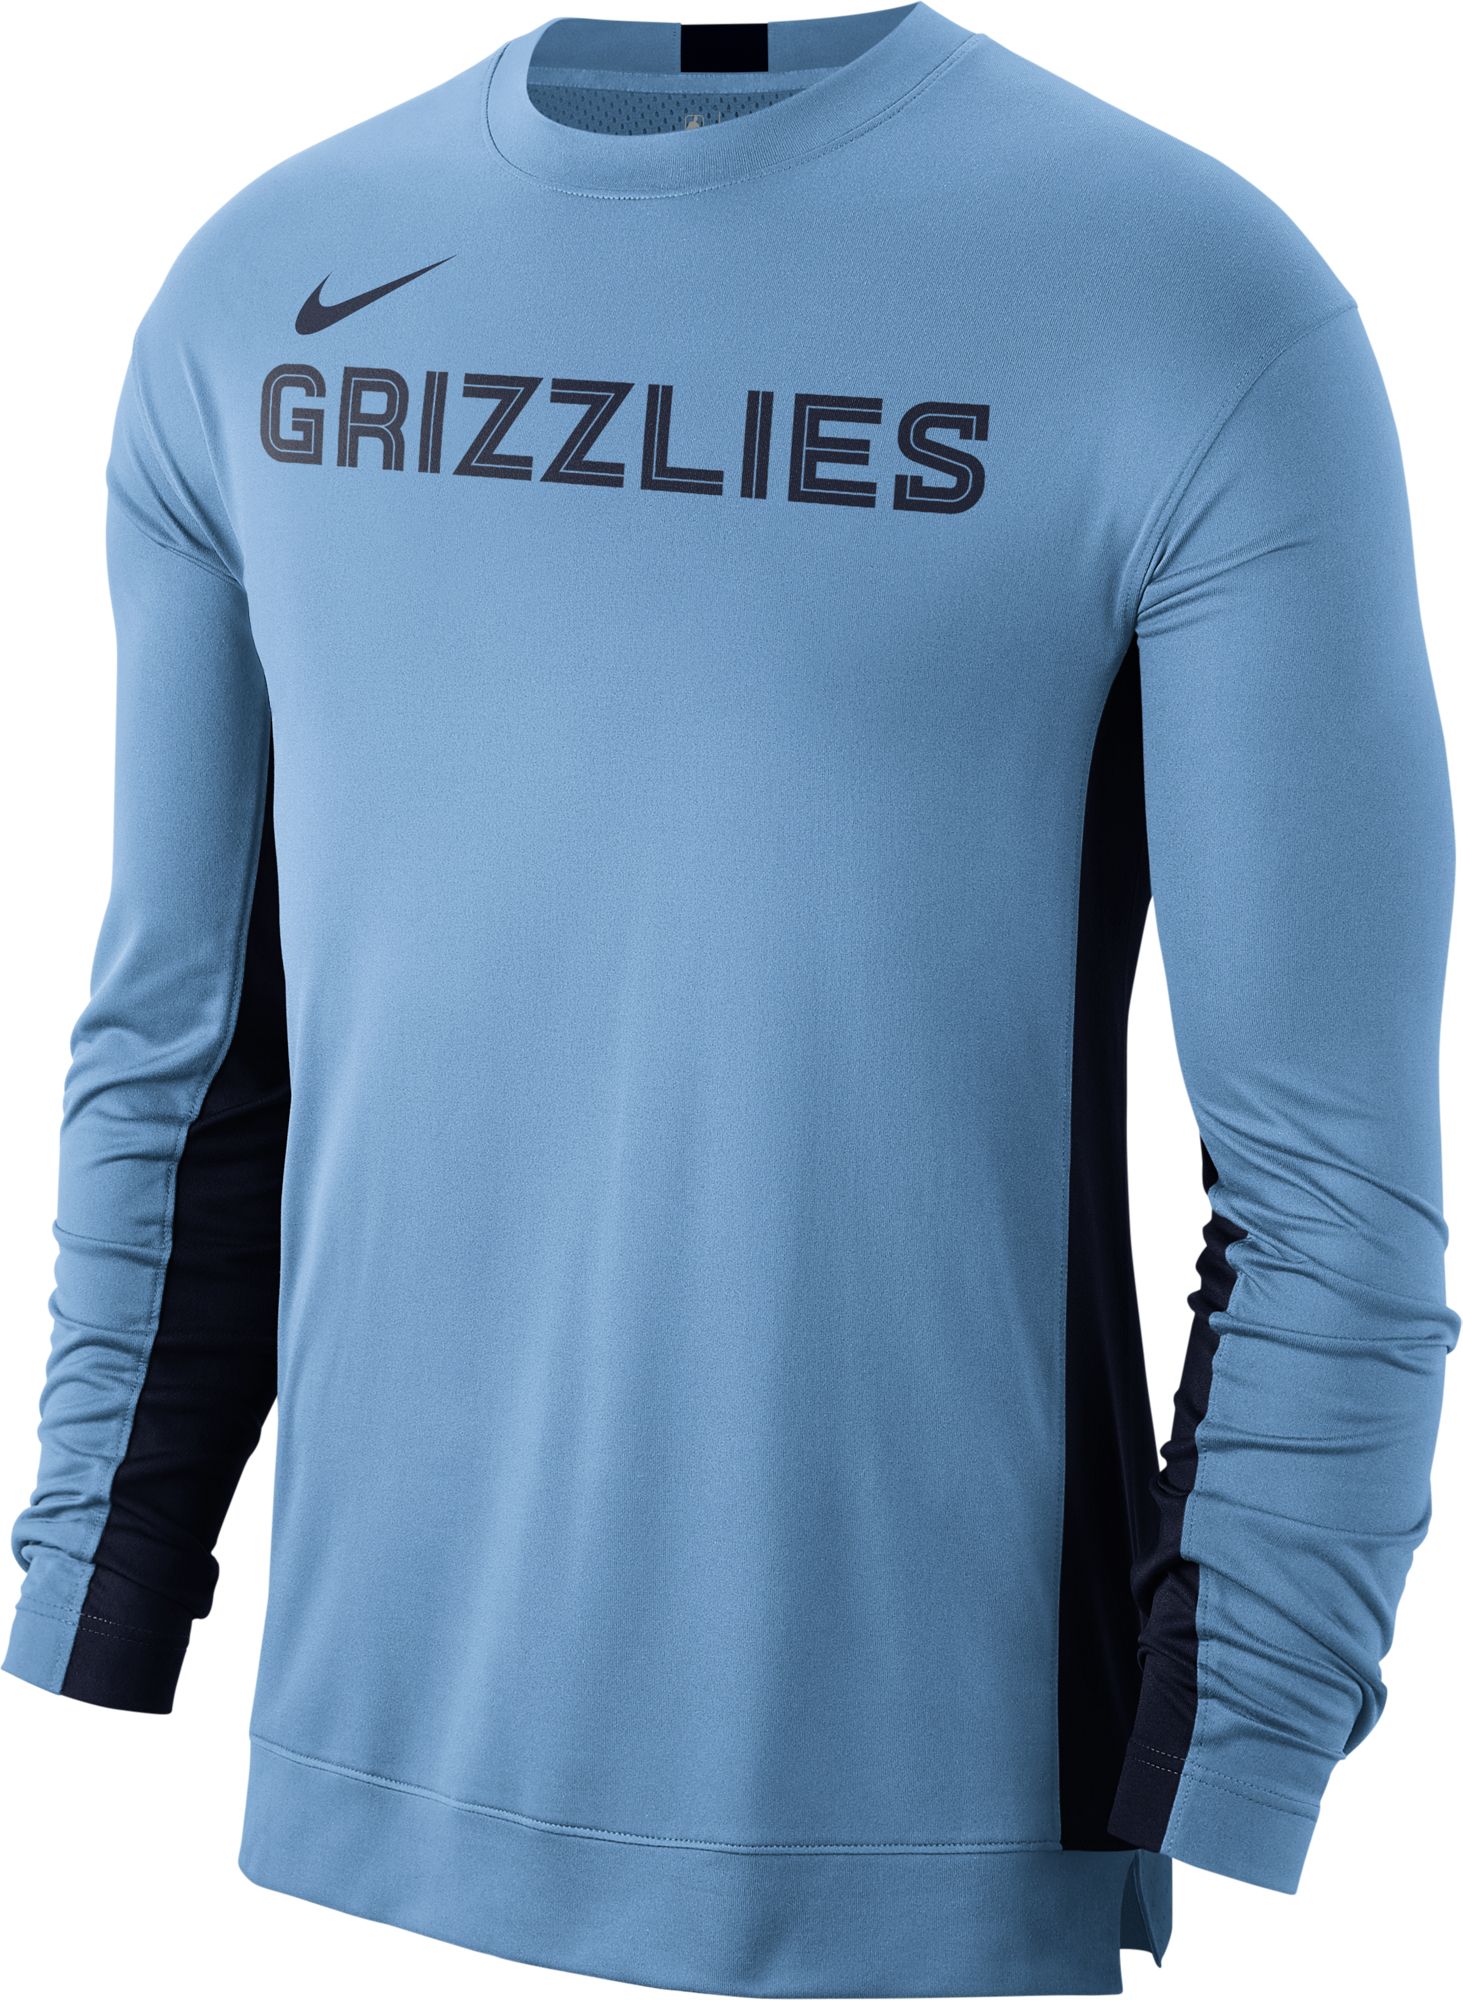 memphis grizzlies sleeved jersey